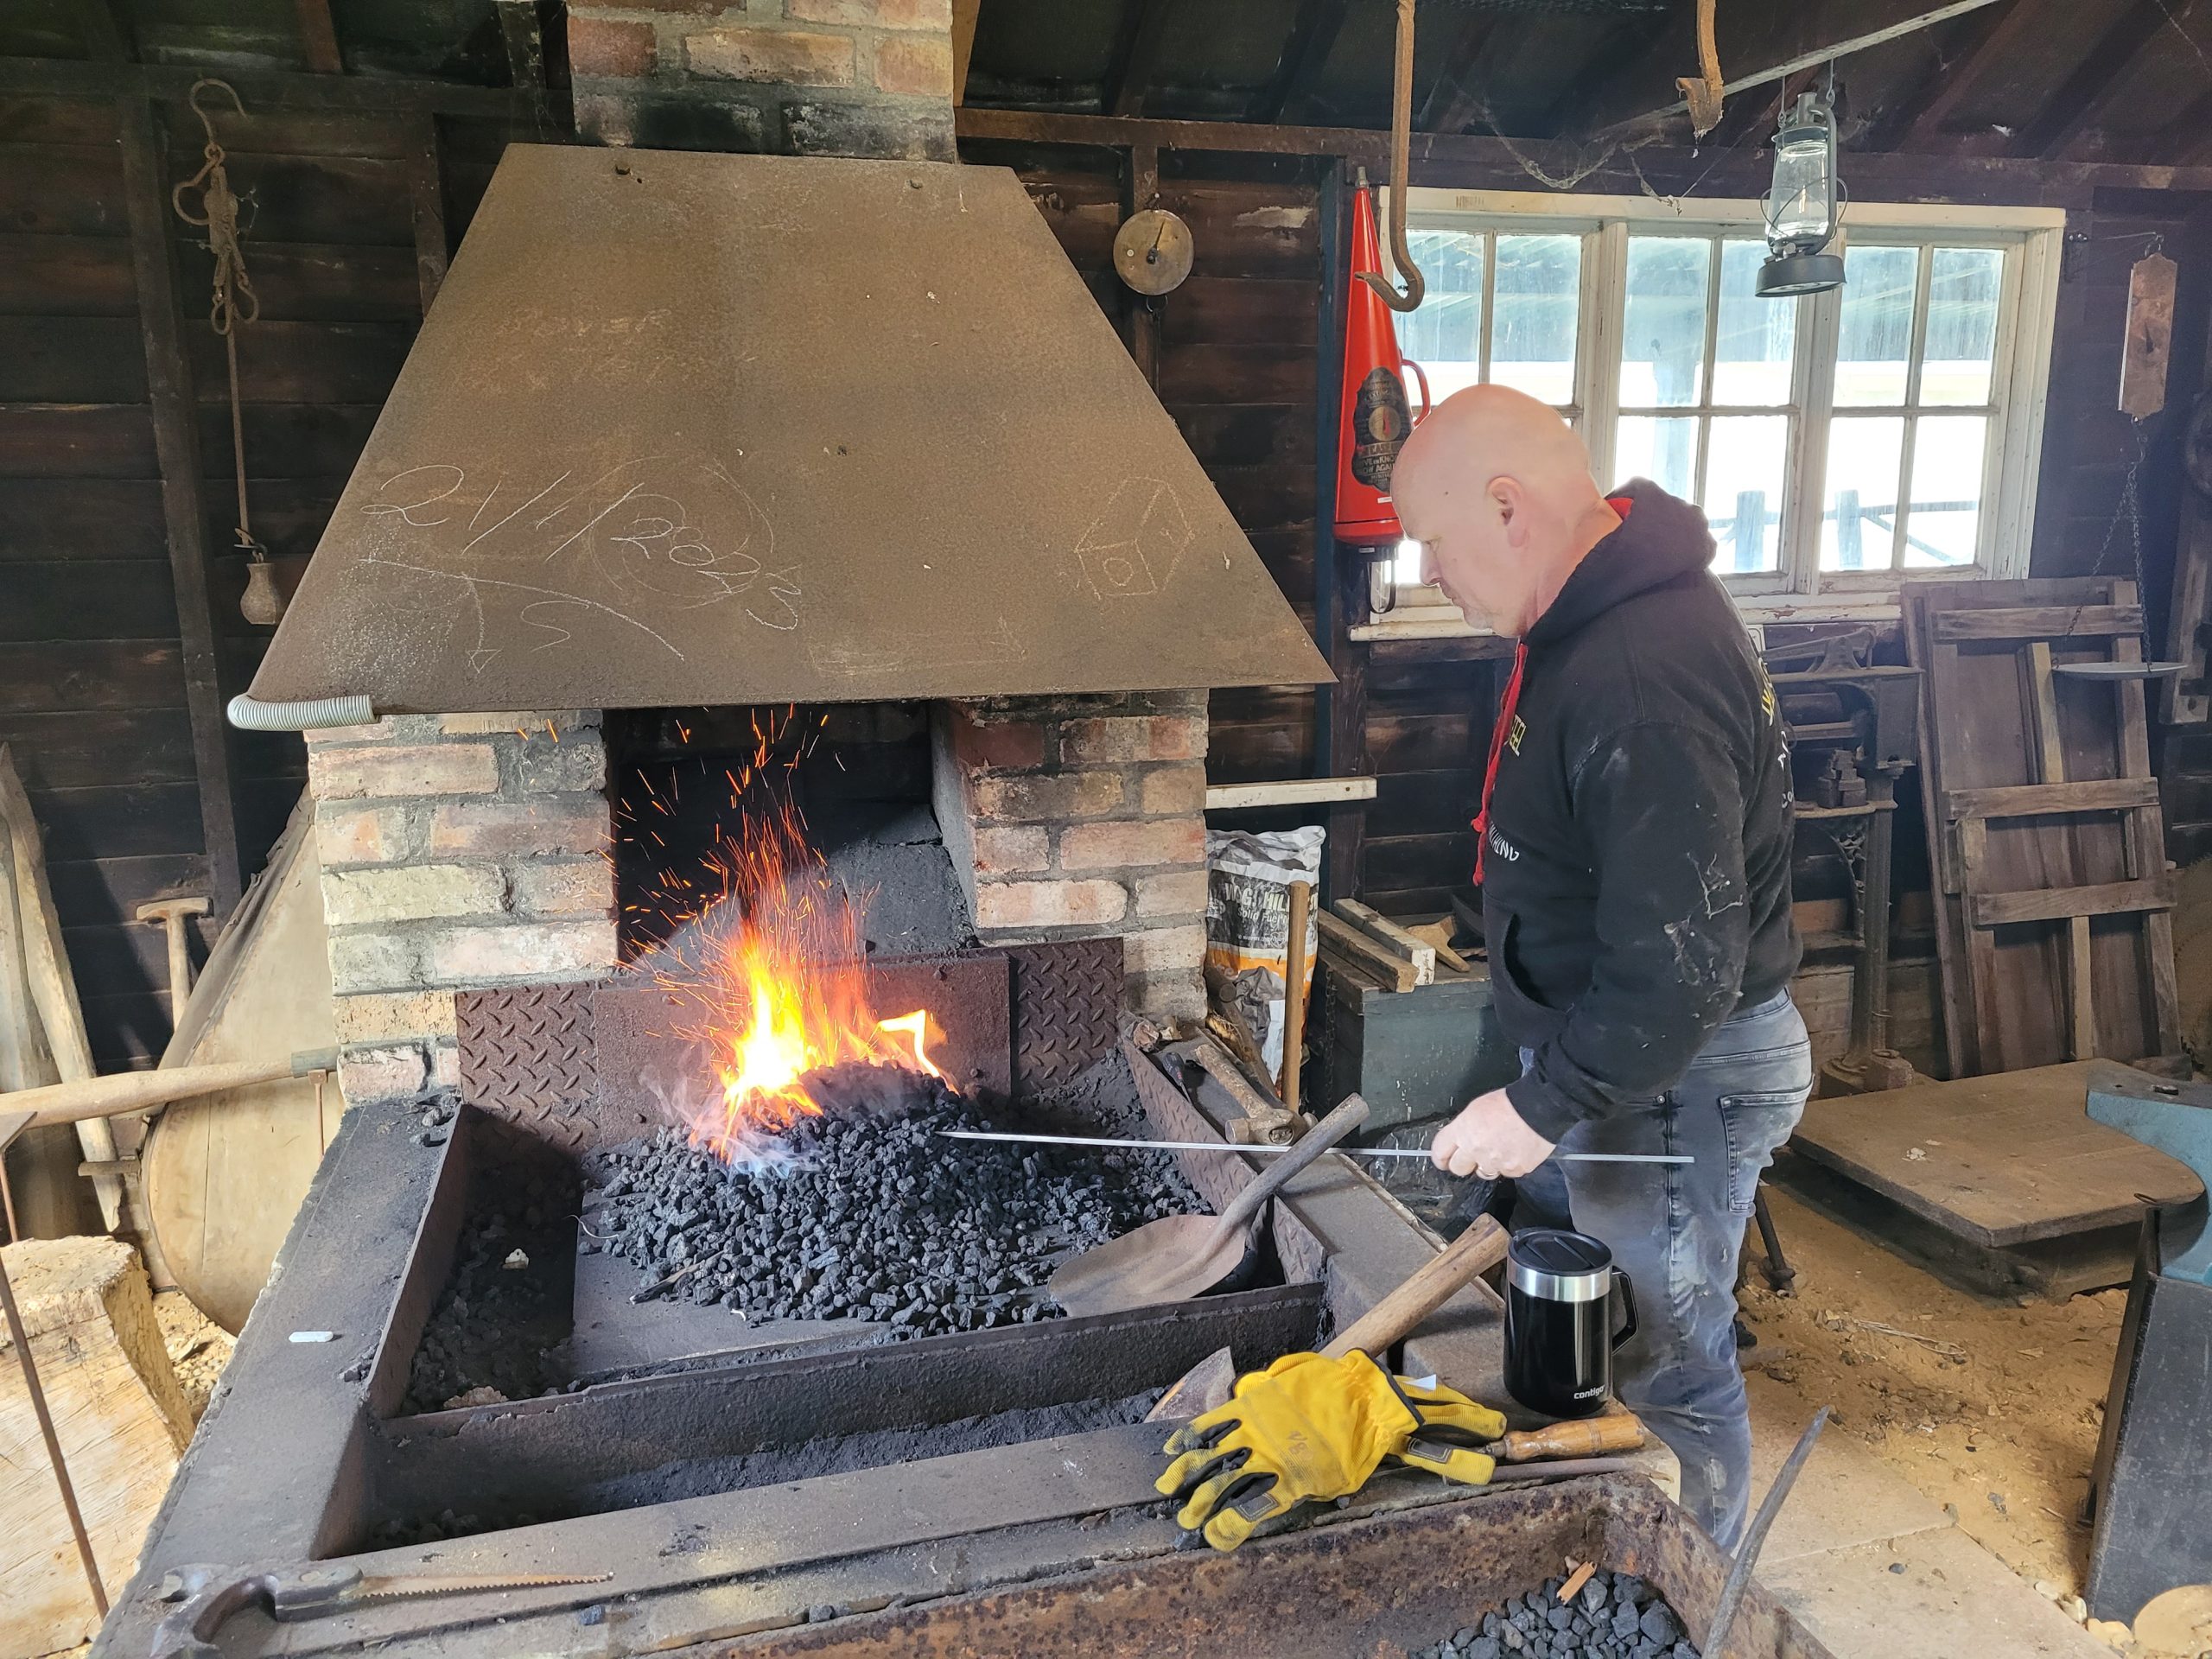 Will of Steel, the Burwell Museum blacksmith